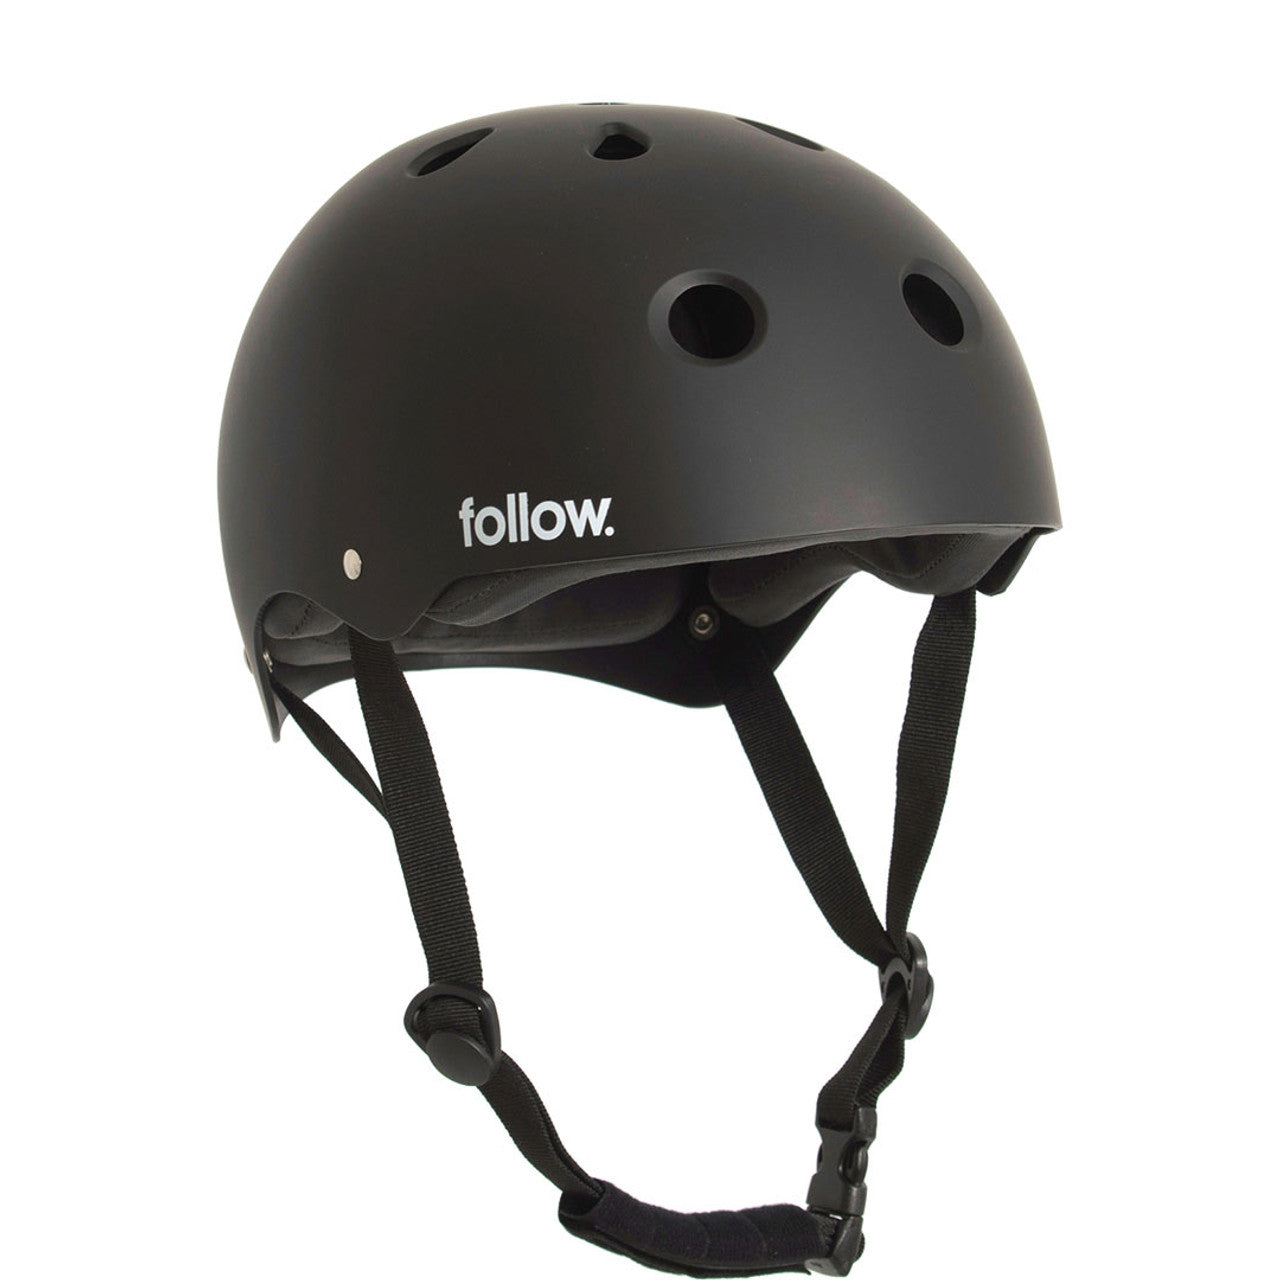 Follow Helmet